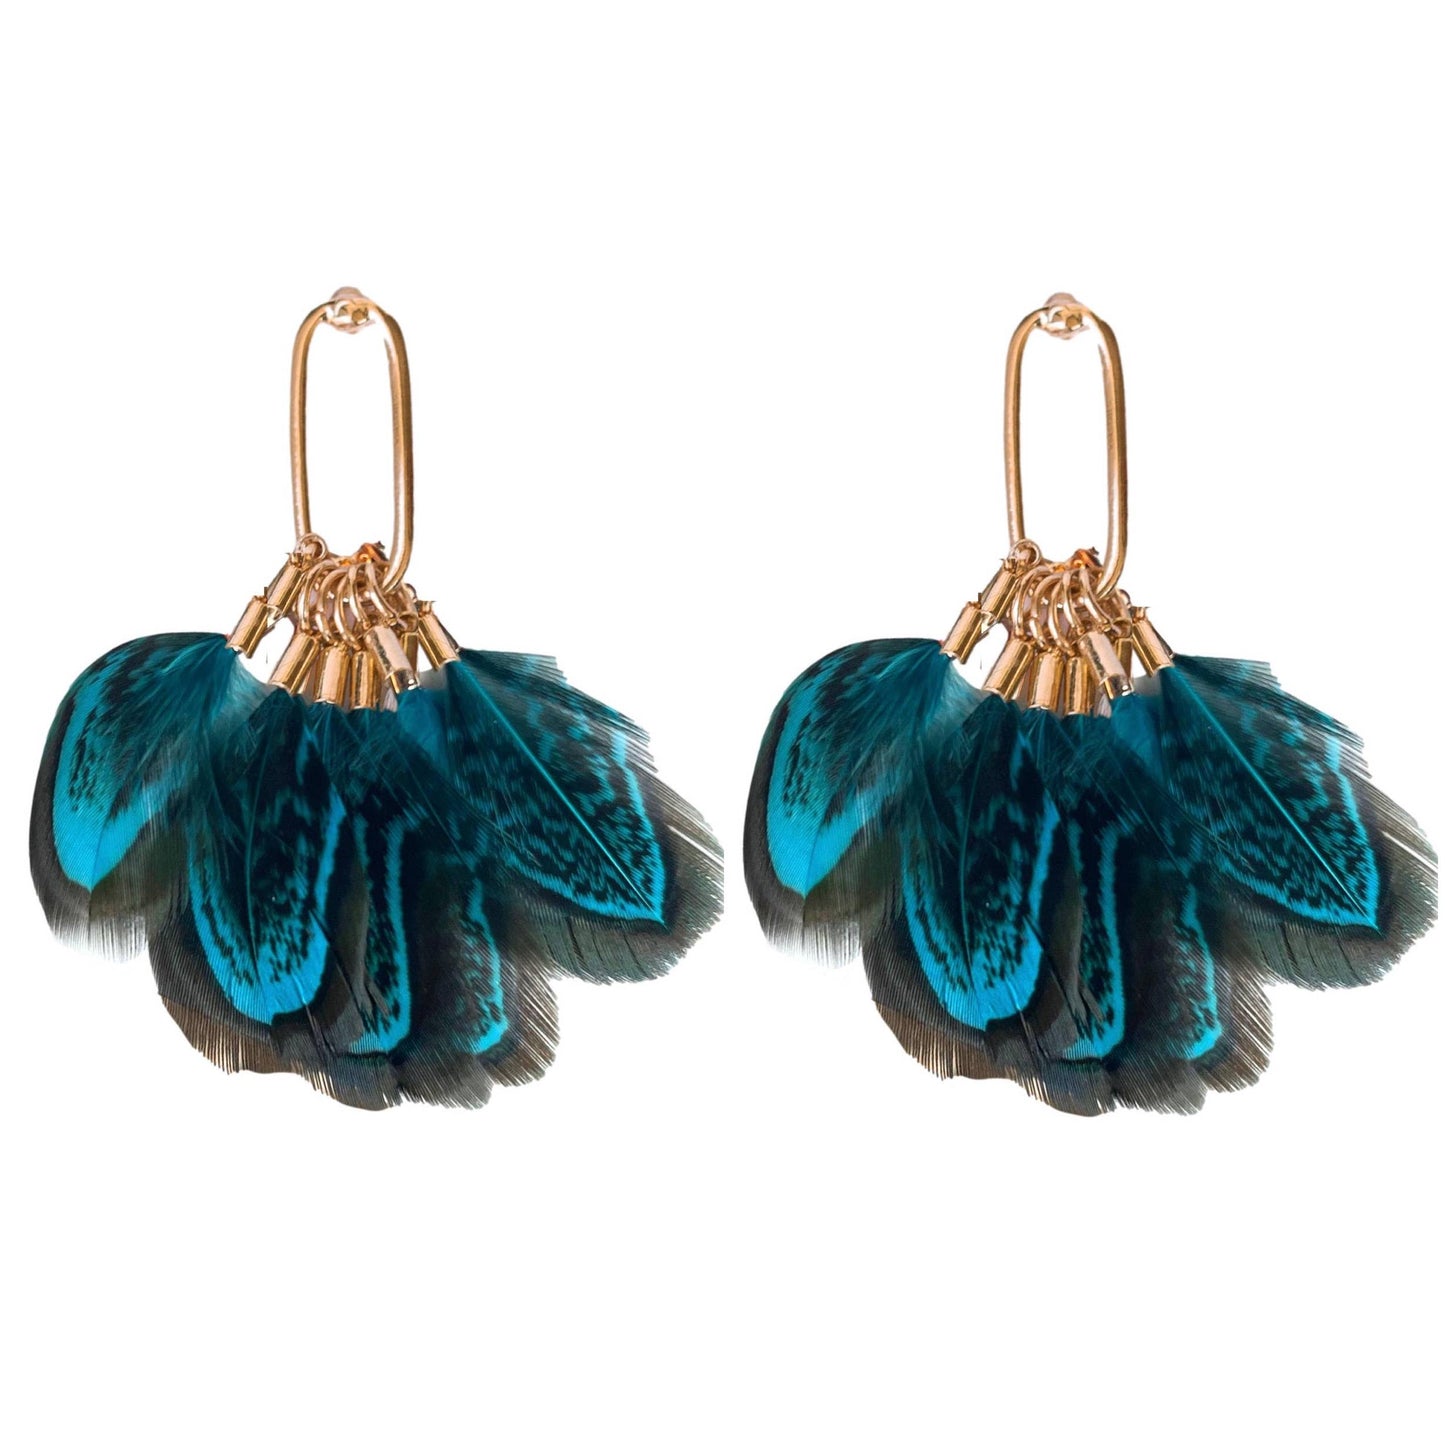 St Armands Designs of Sarasota - Peacock Feather Statement Tassel Earrings